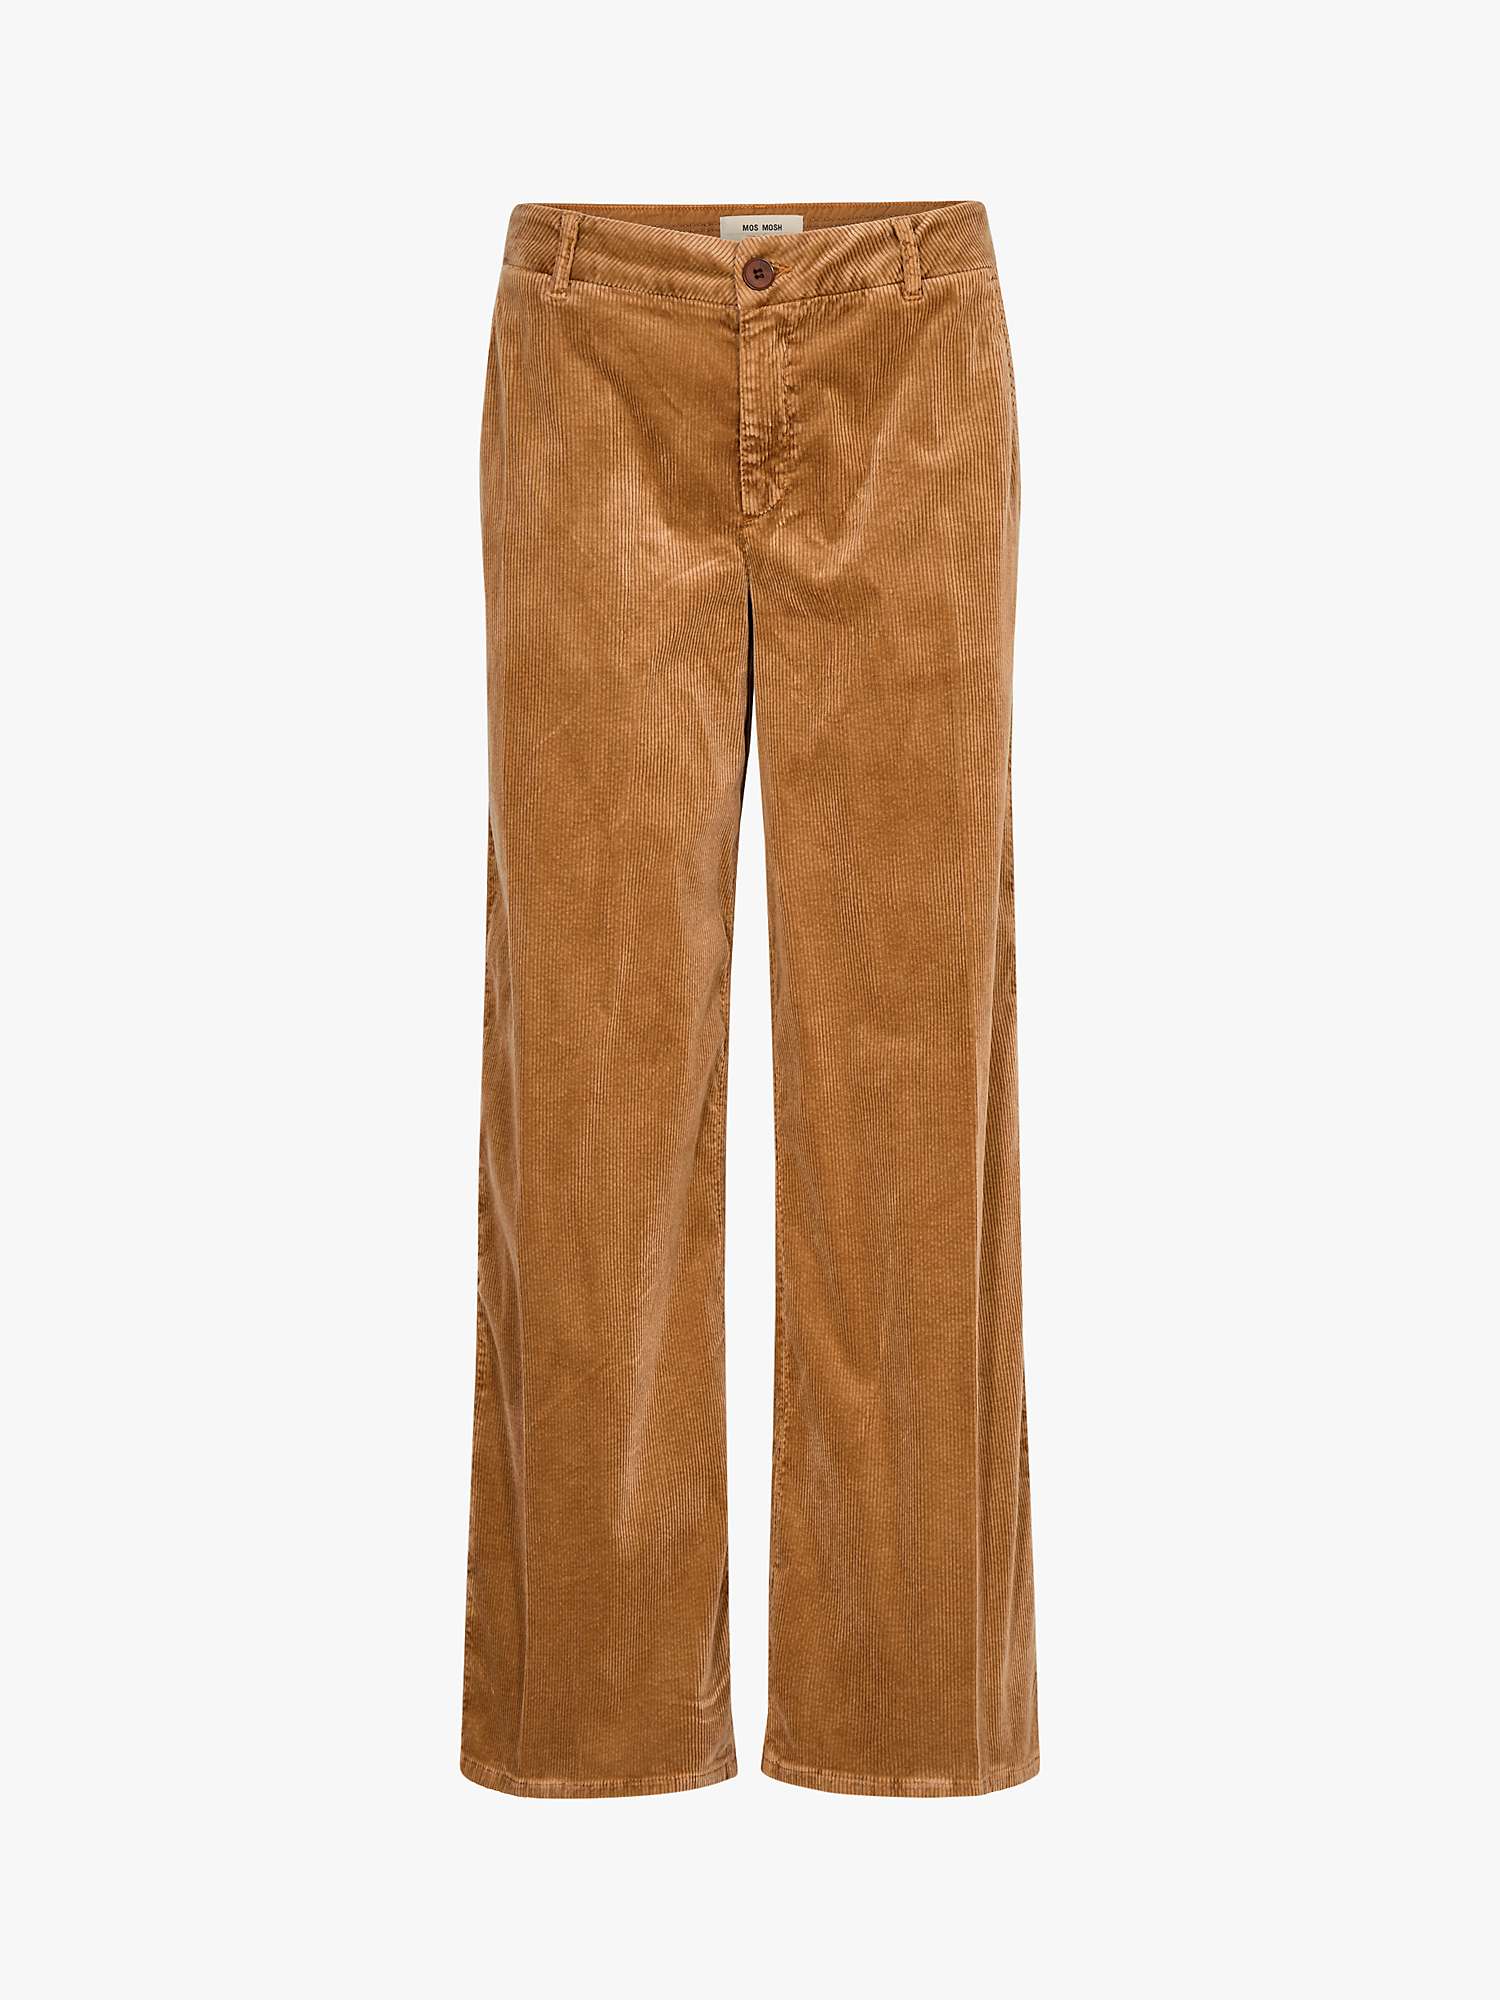 Buy MOS MOSH Isha Corduroy Trousers, Chipmunk Online at johnlewis.com